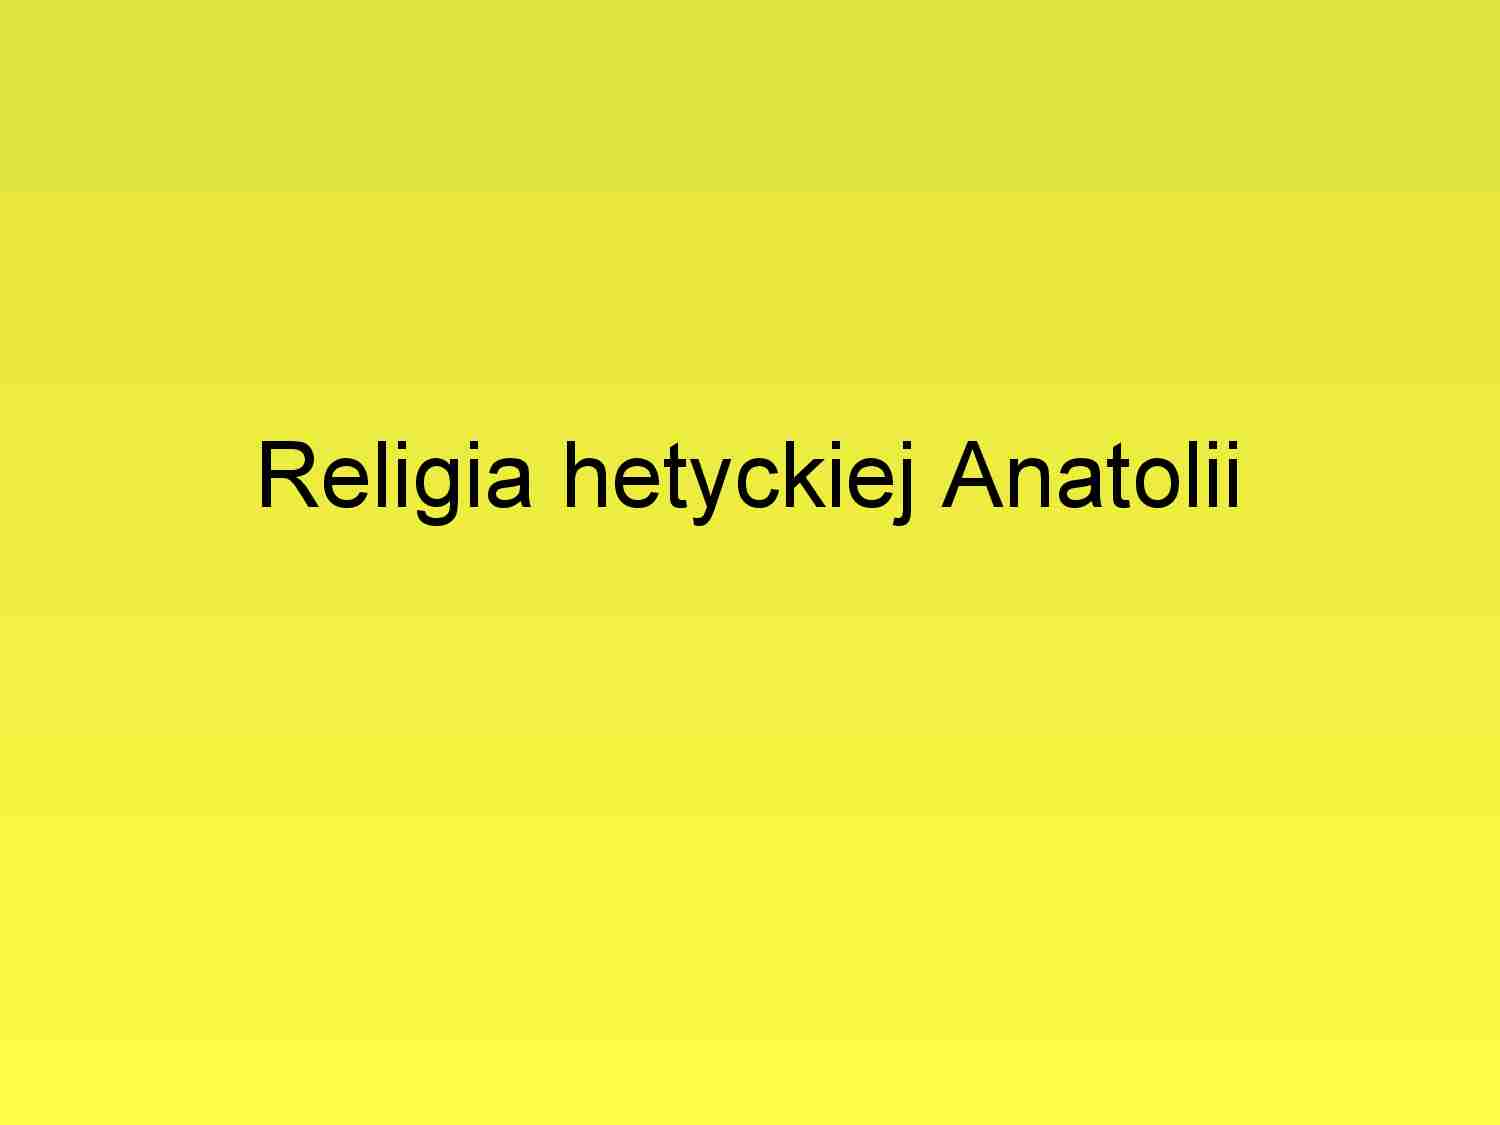 Mitologia Anatolii i Syropalestyny - strona 1